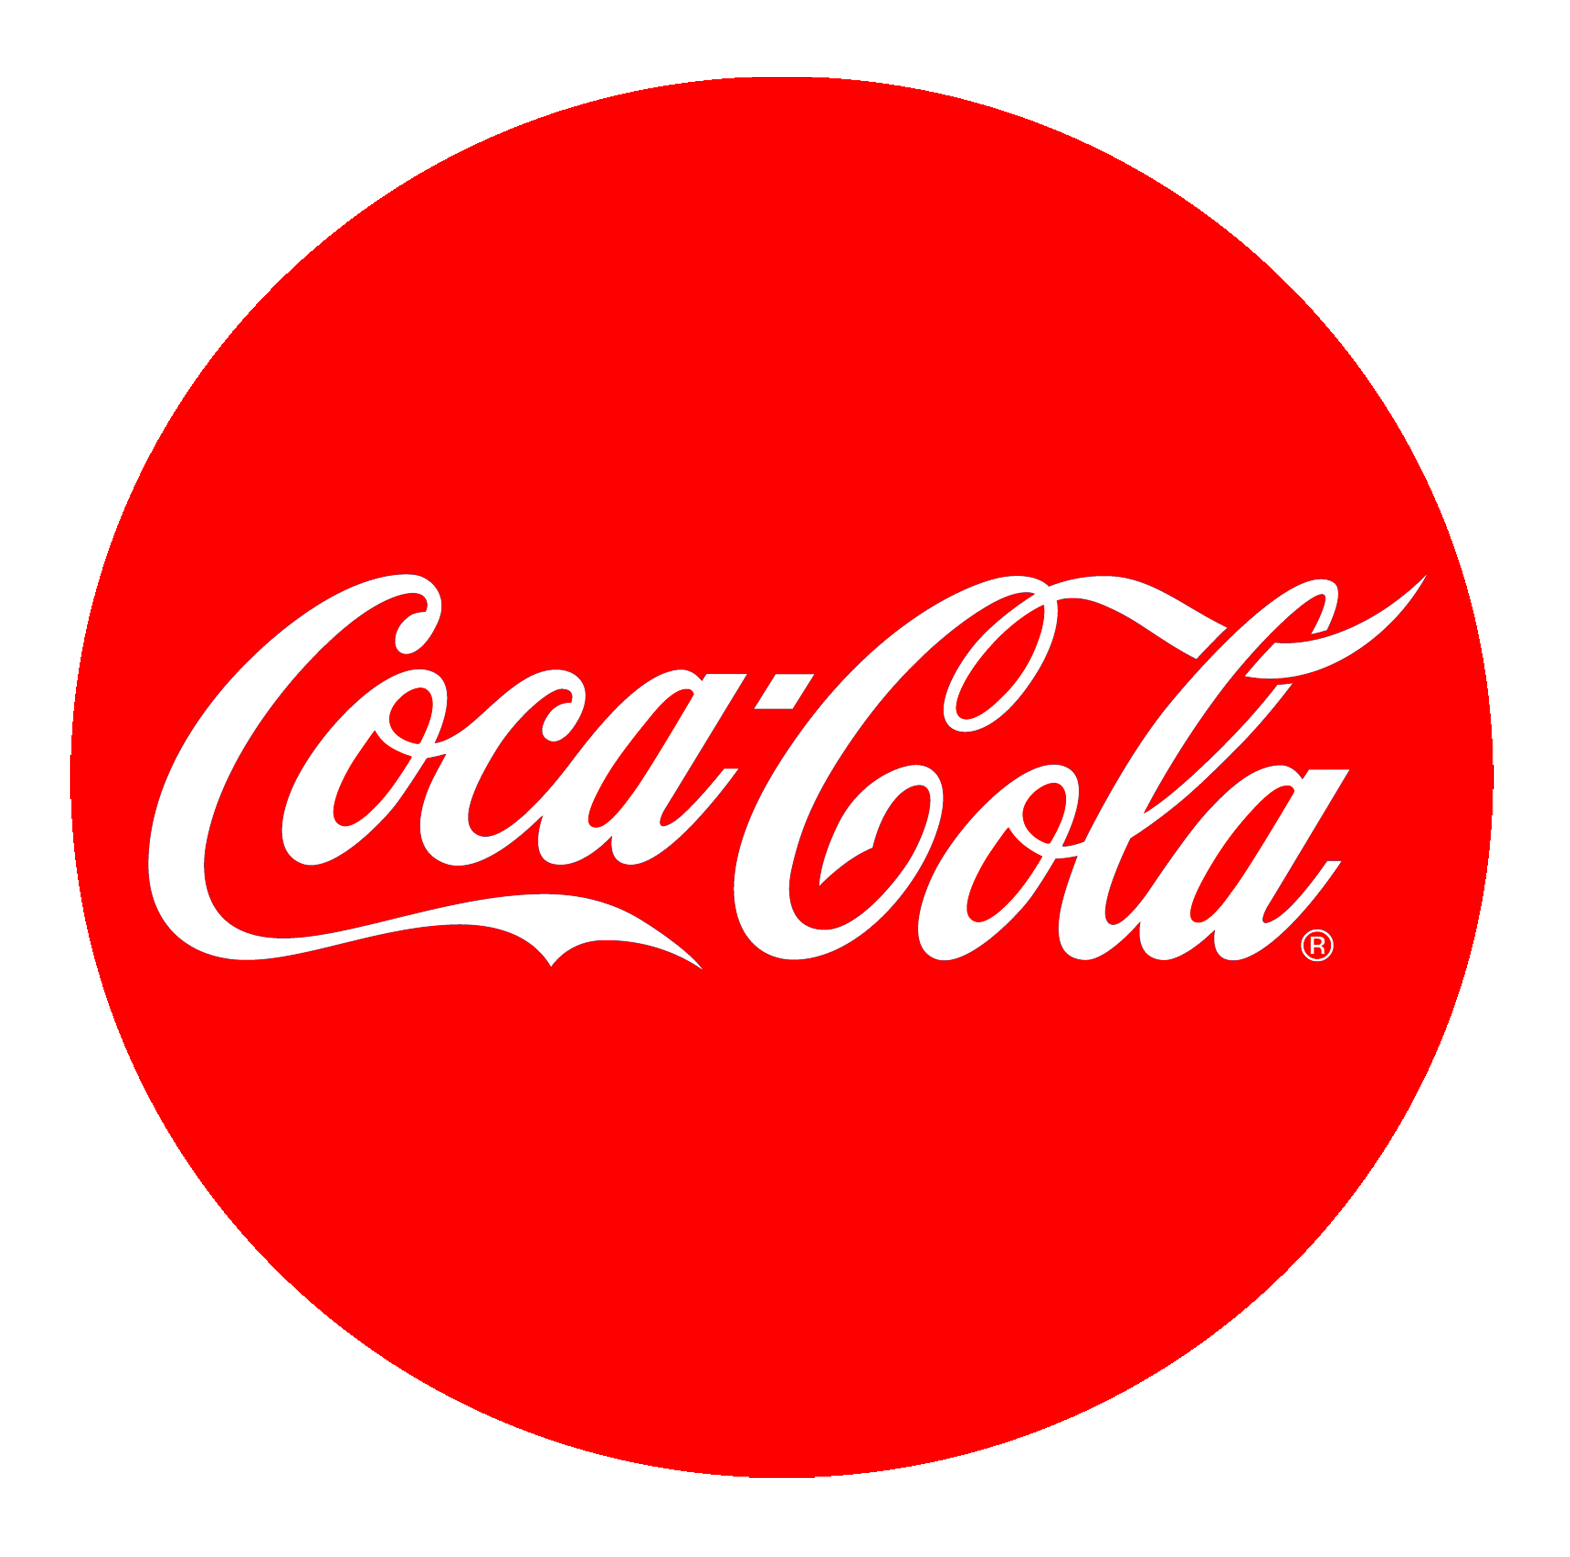 Coca-Cola România